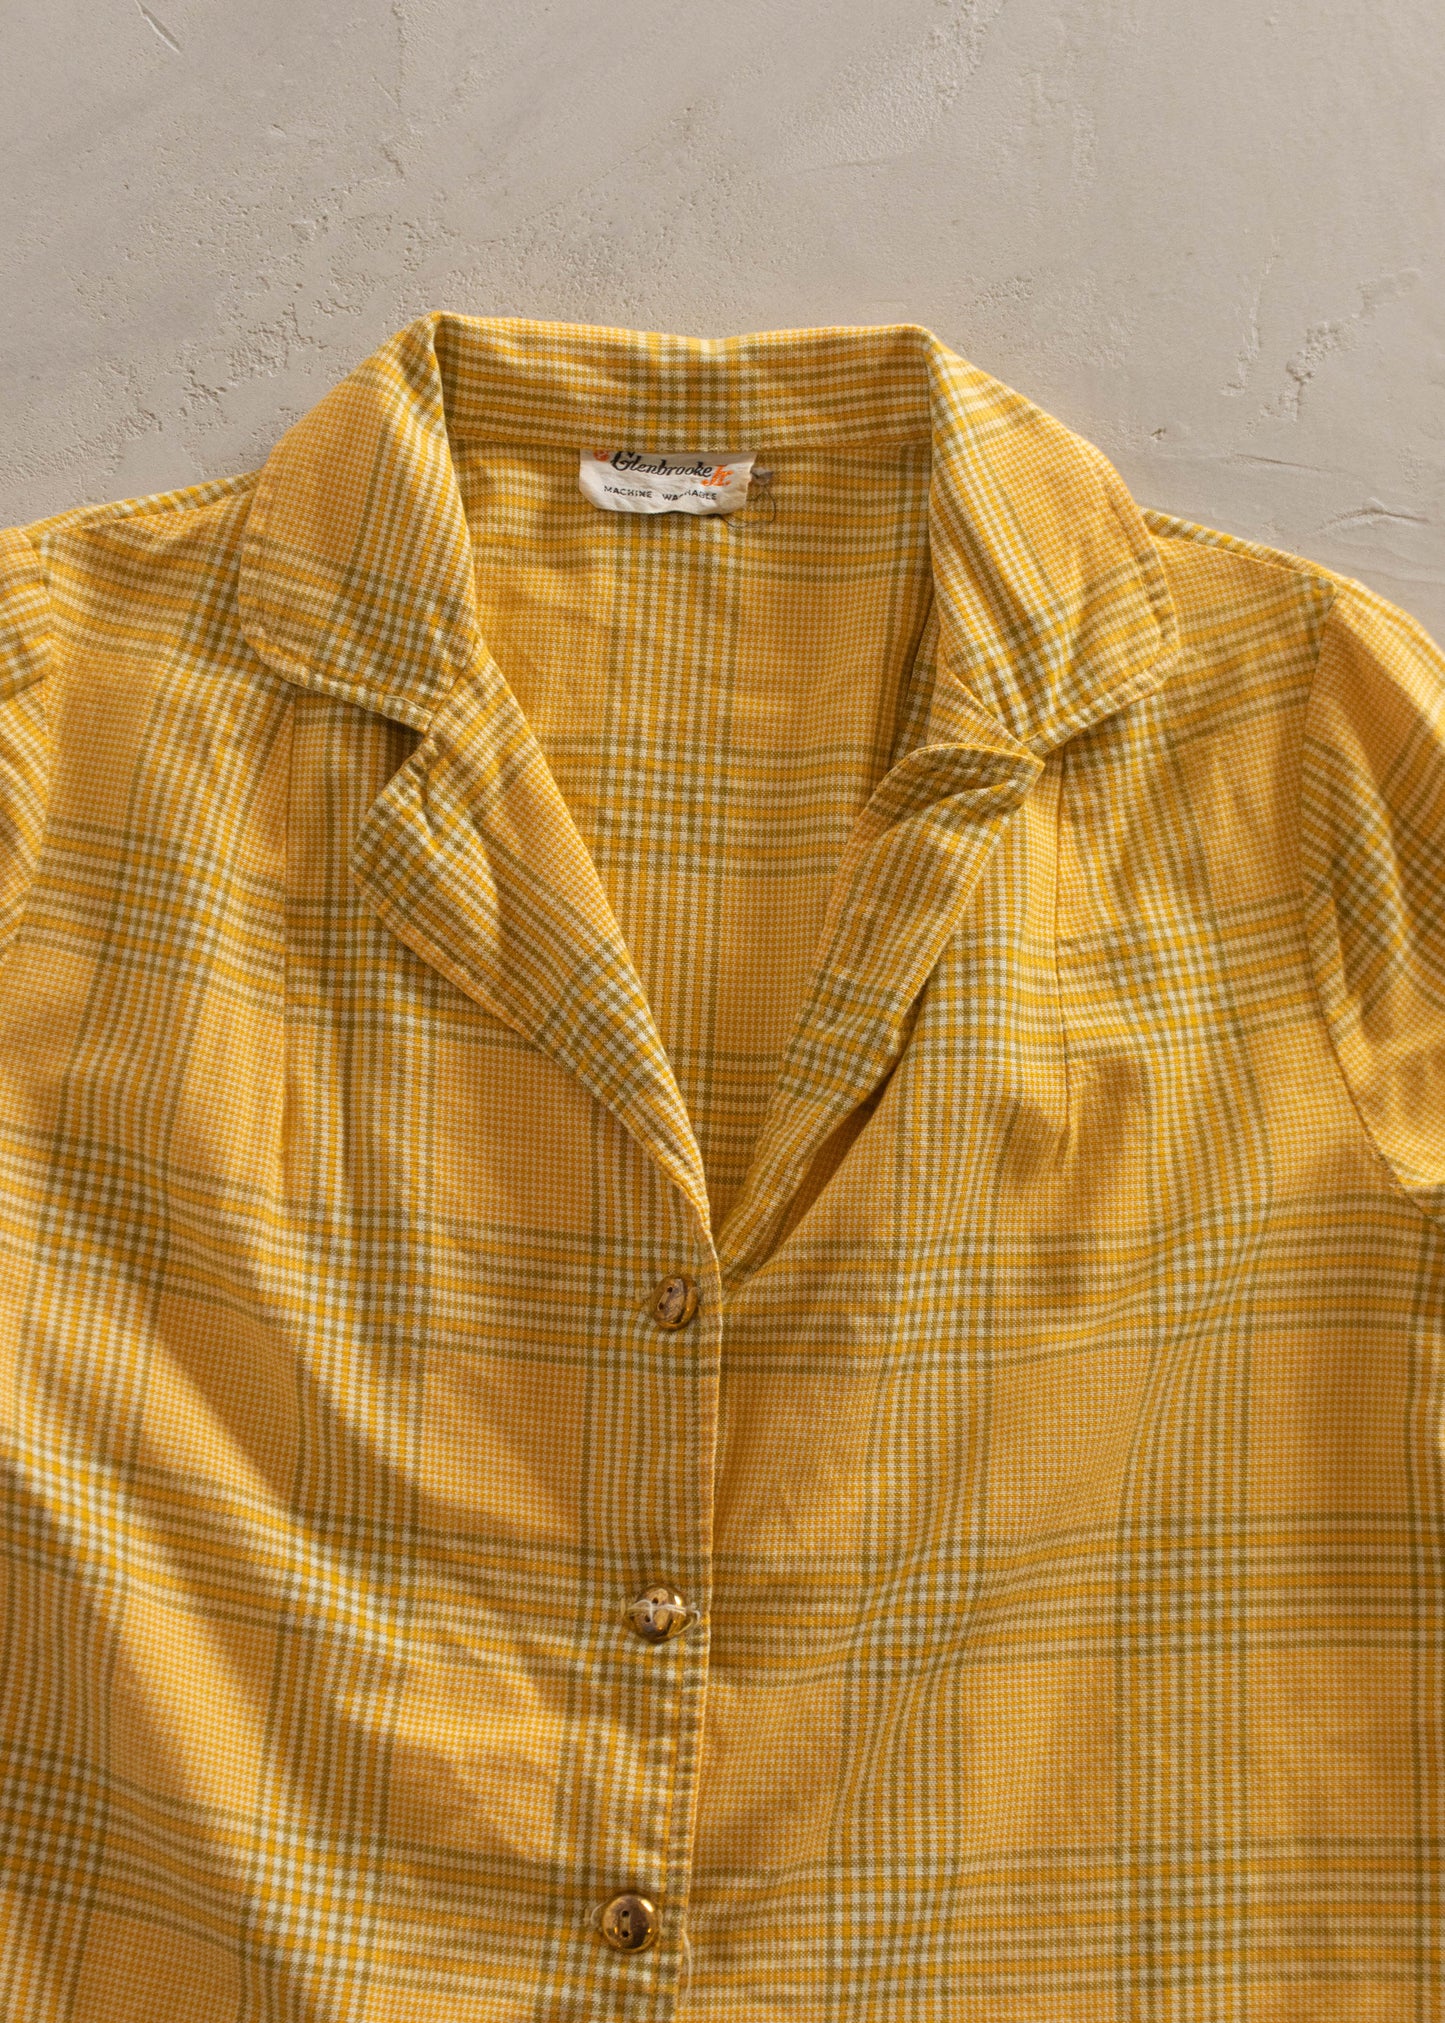 1960s Glenbrooke Jr. Plaid Pattern Long Sleeve Button Up Shirt Size 2XS/XS